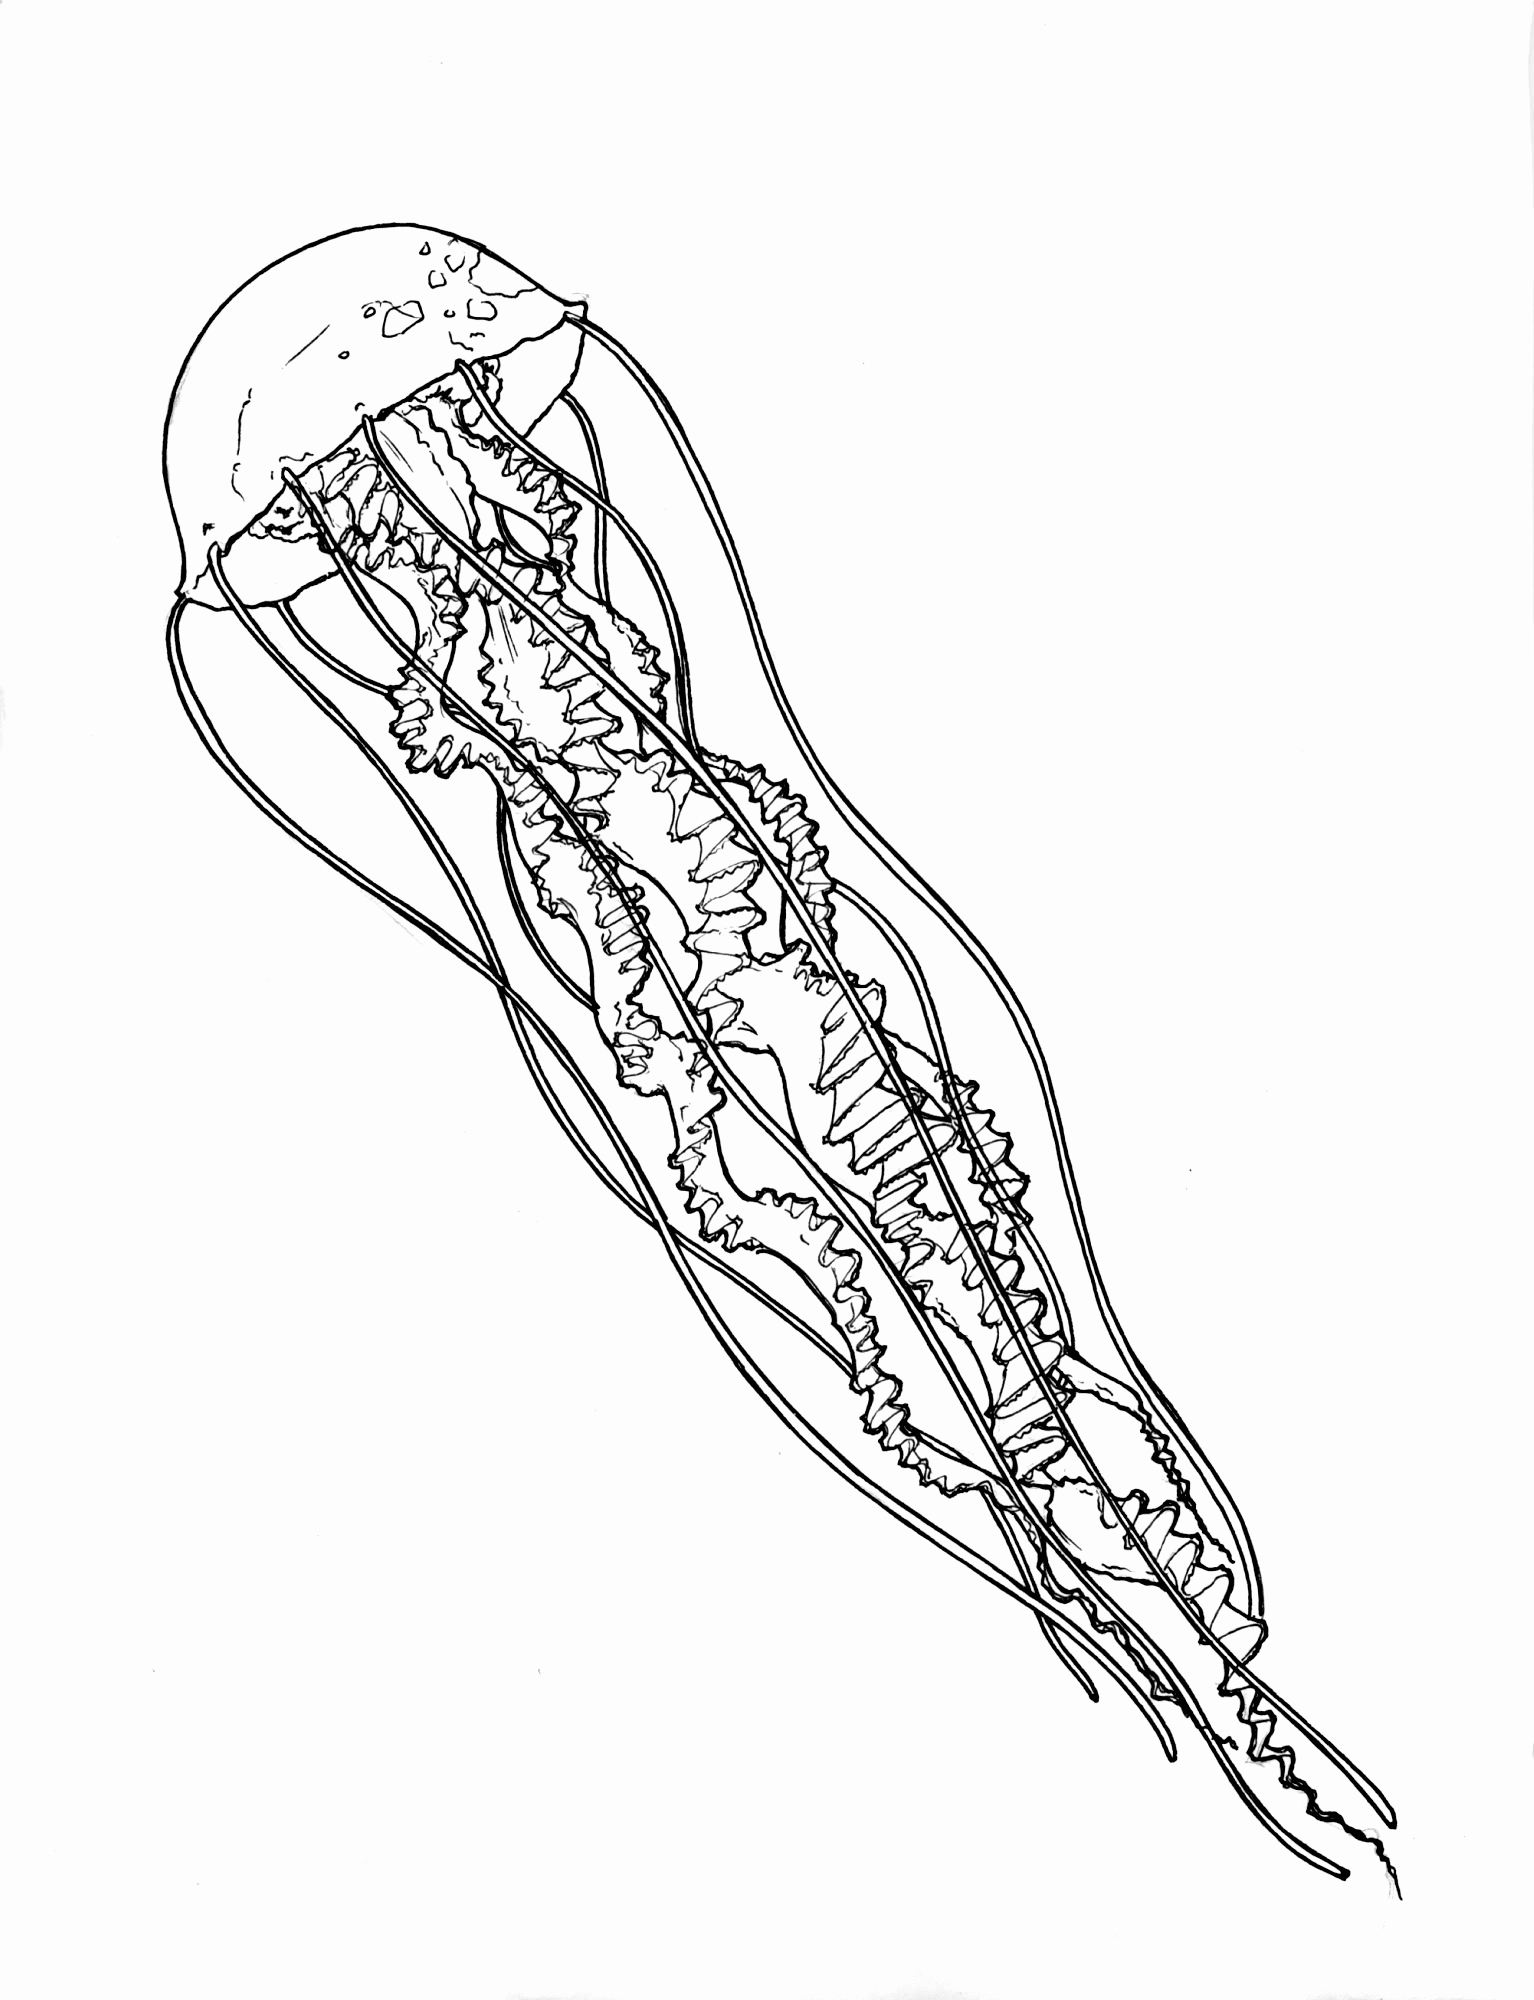 Jellyfish Line Drawing at GetDrawings | Free download